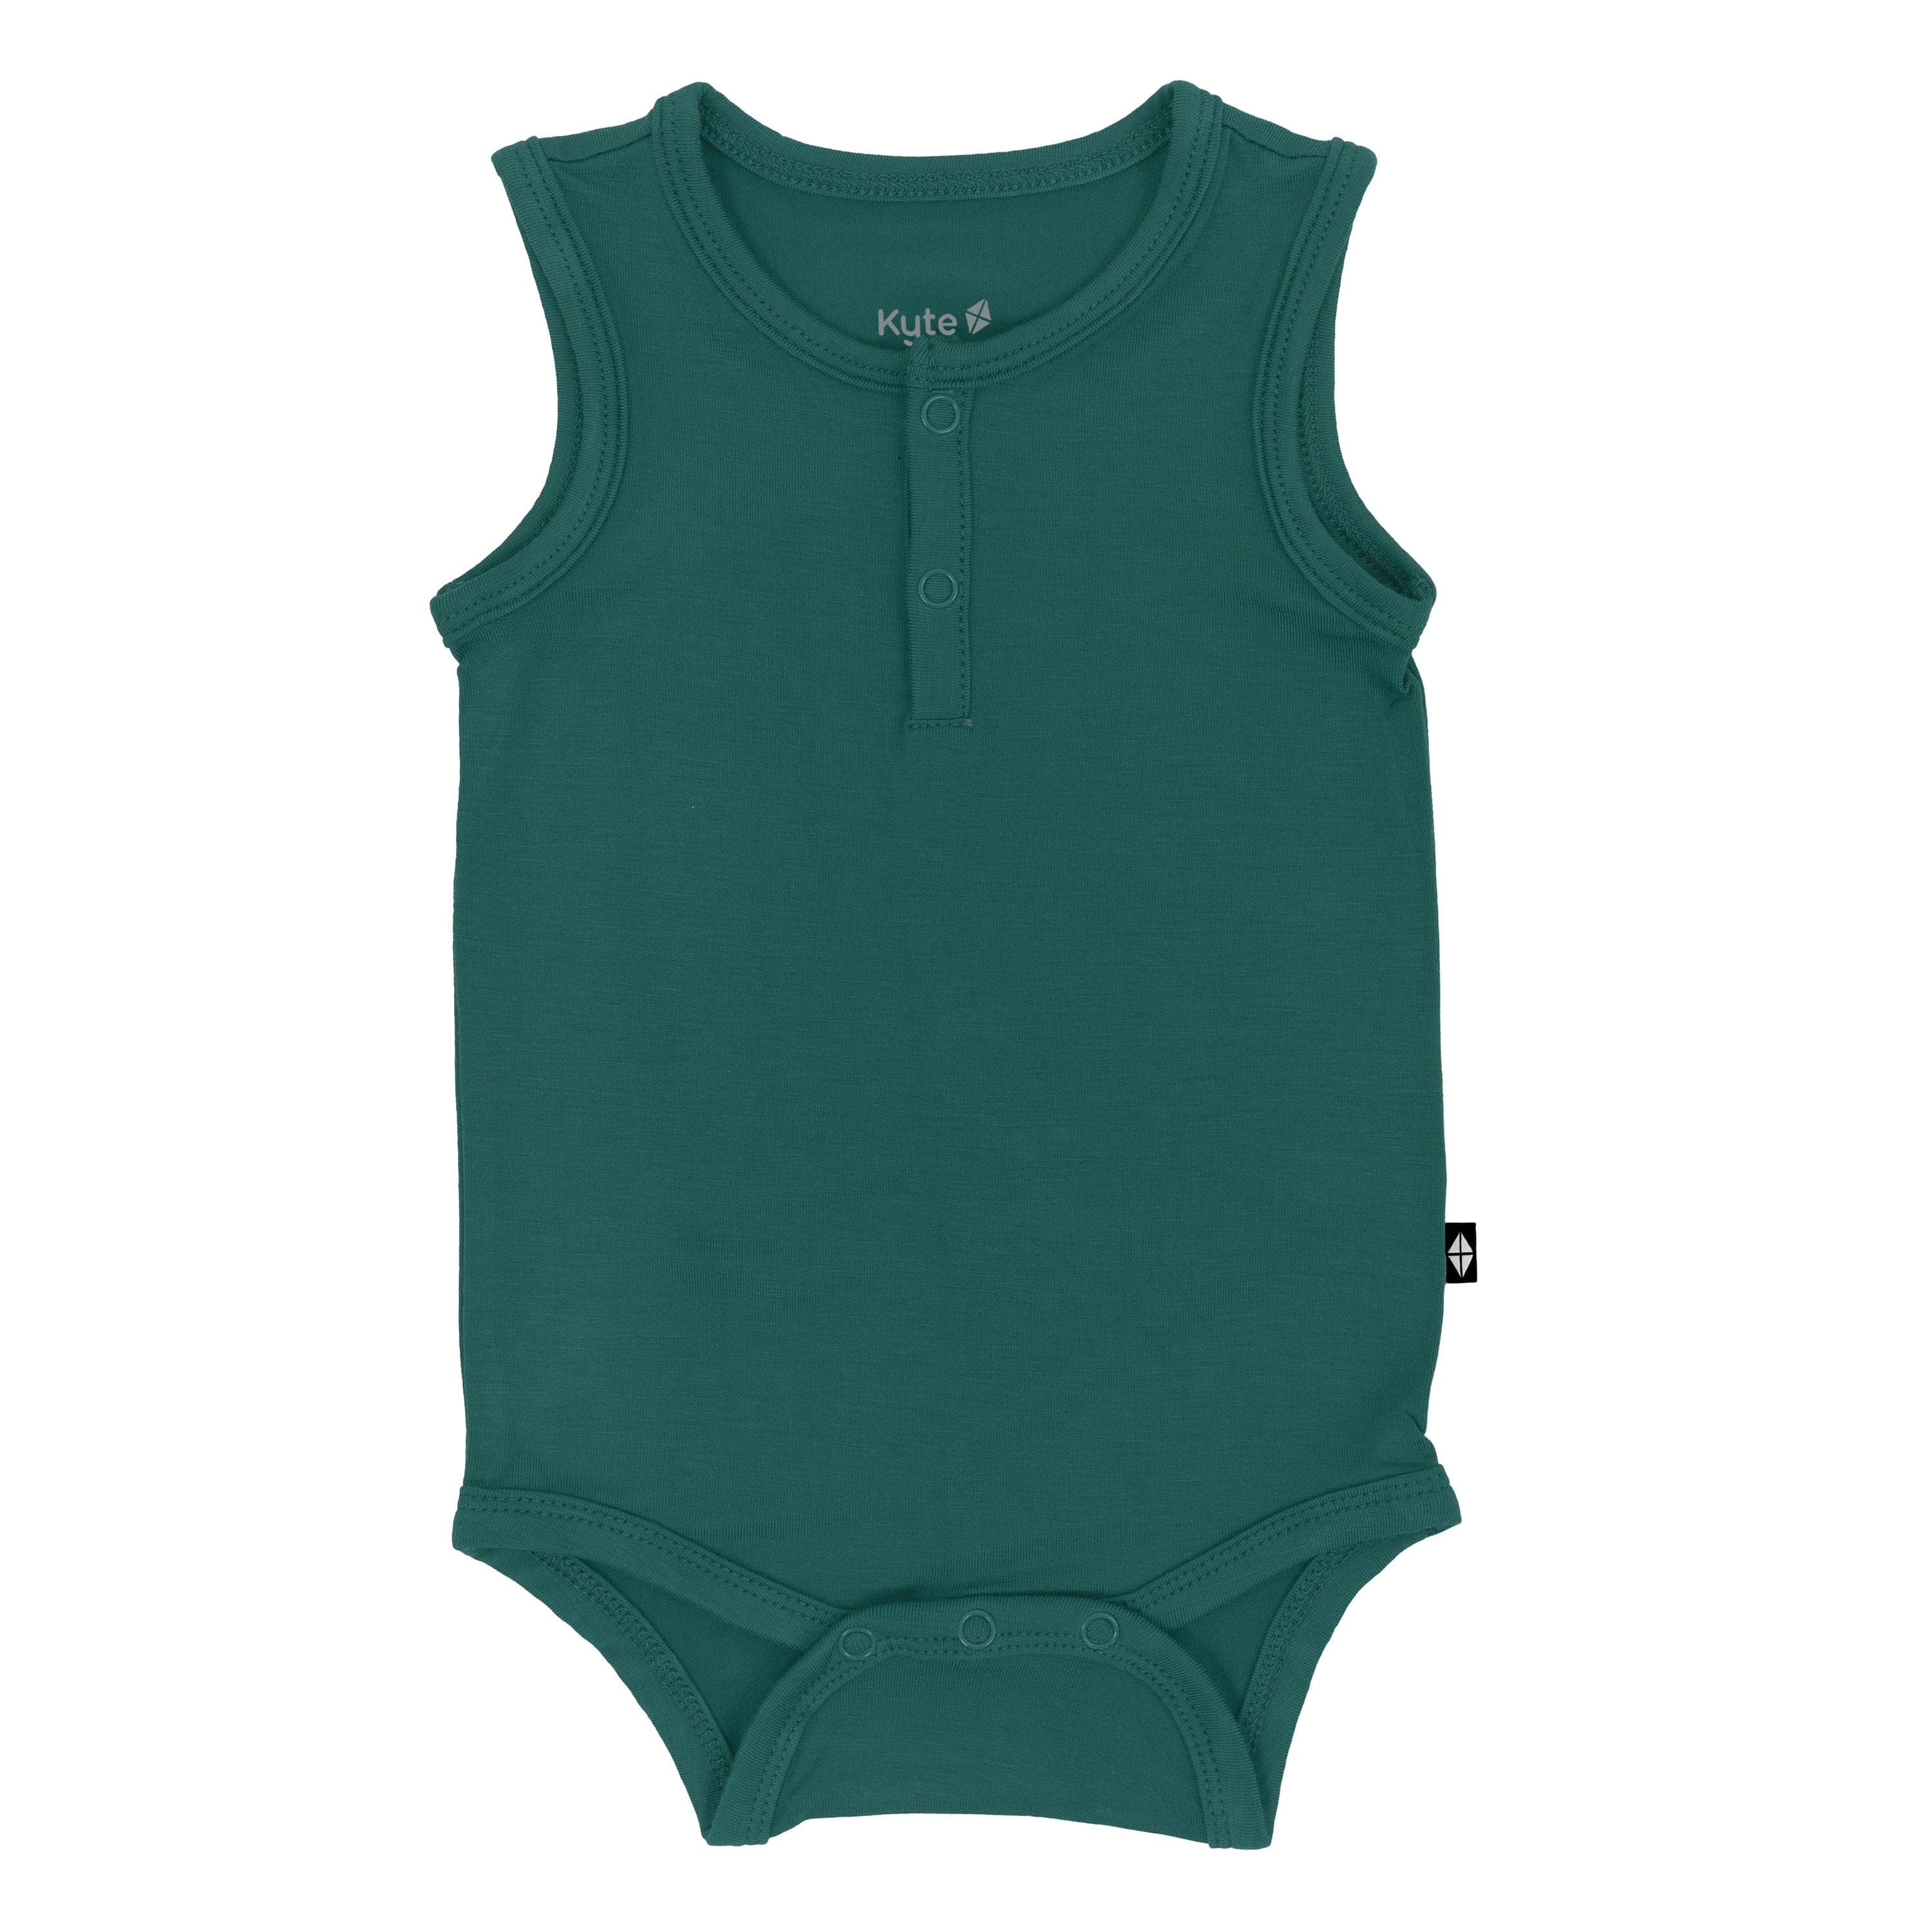 Kyte Baby Sleeveless Bodysuit in Emerald